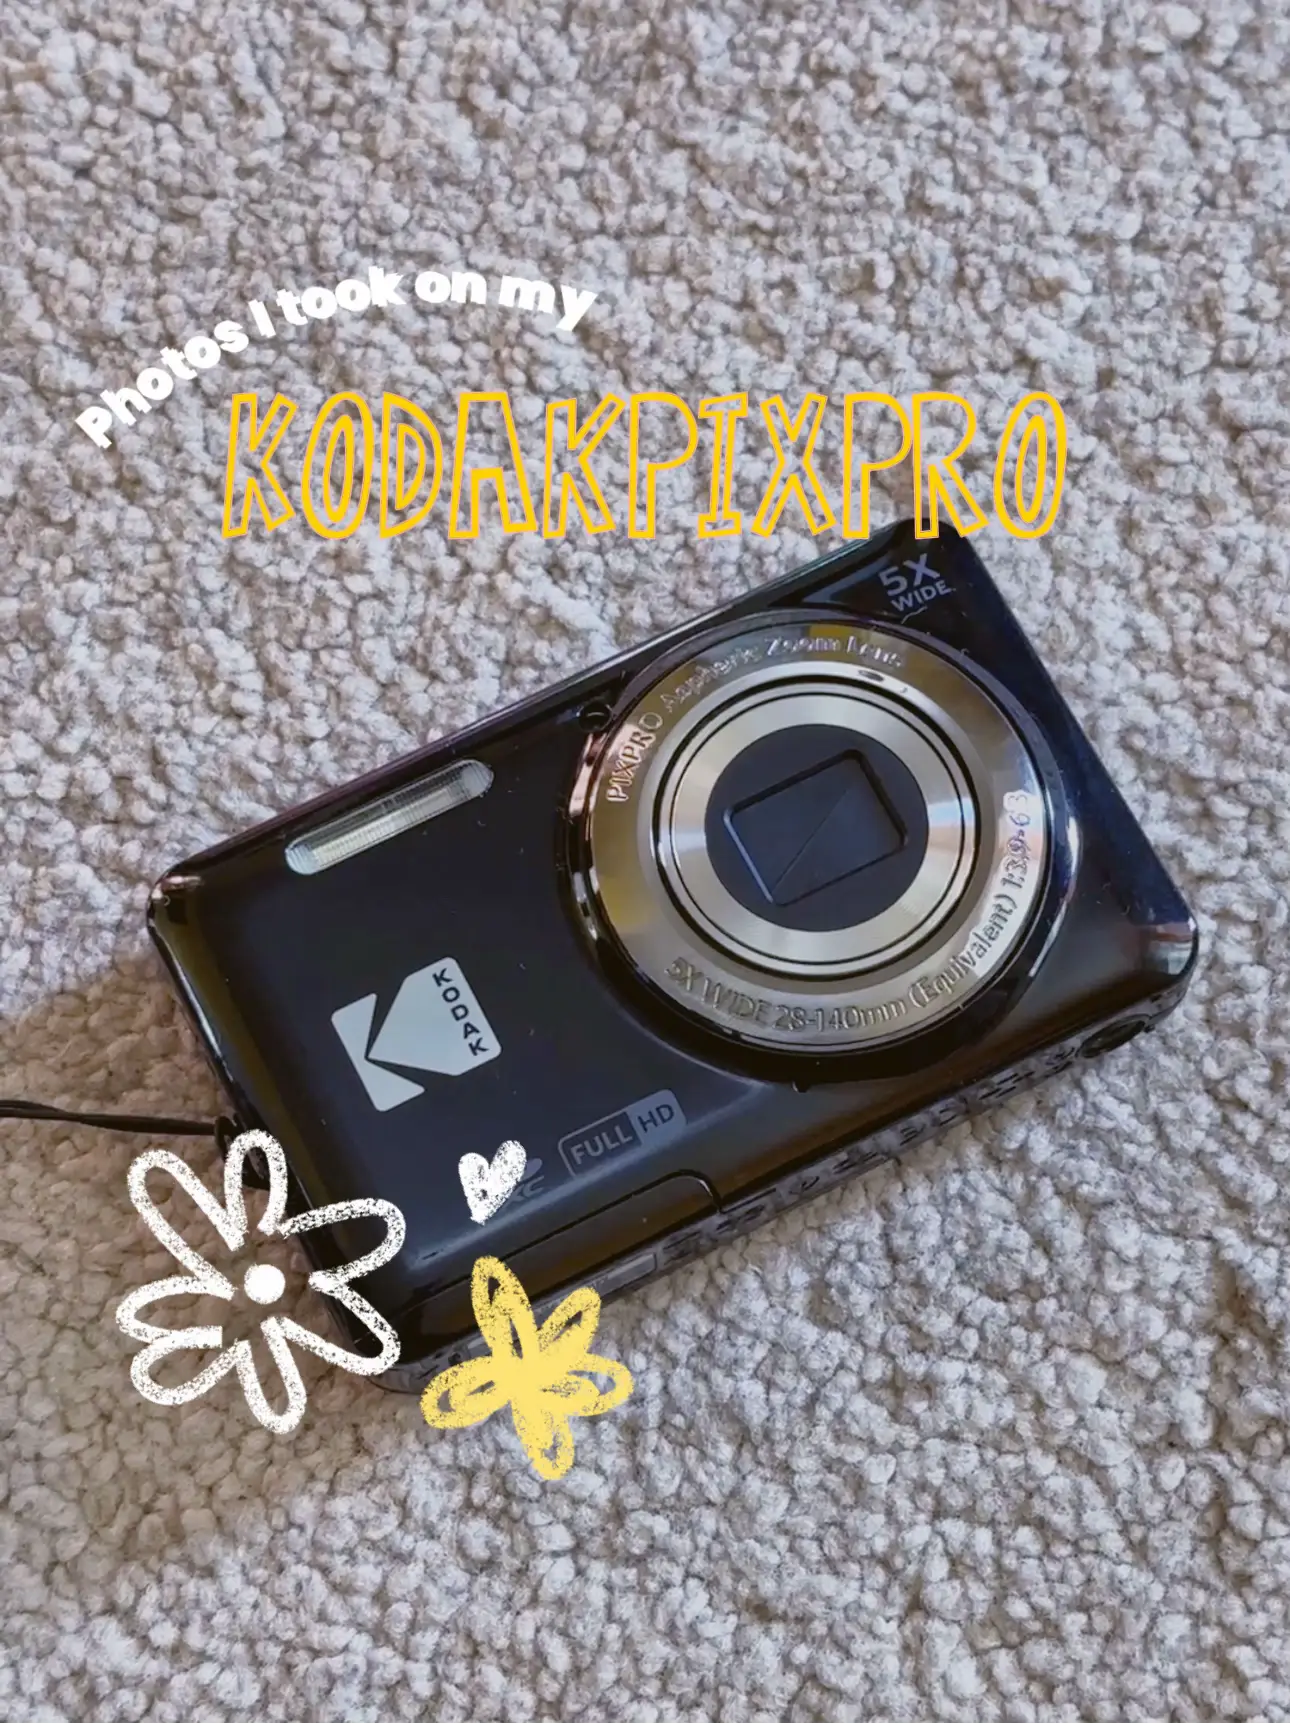 actually such a great camera to use for fun! #digitalcamera #im22tikto, Kodak  Pixpro Fz45